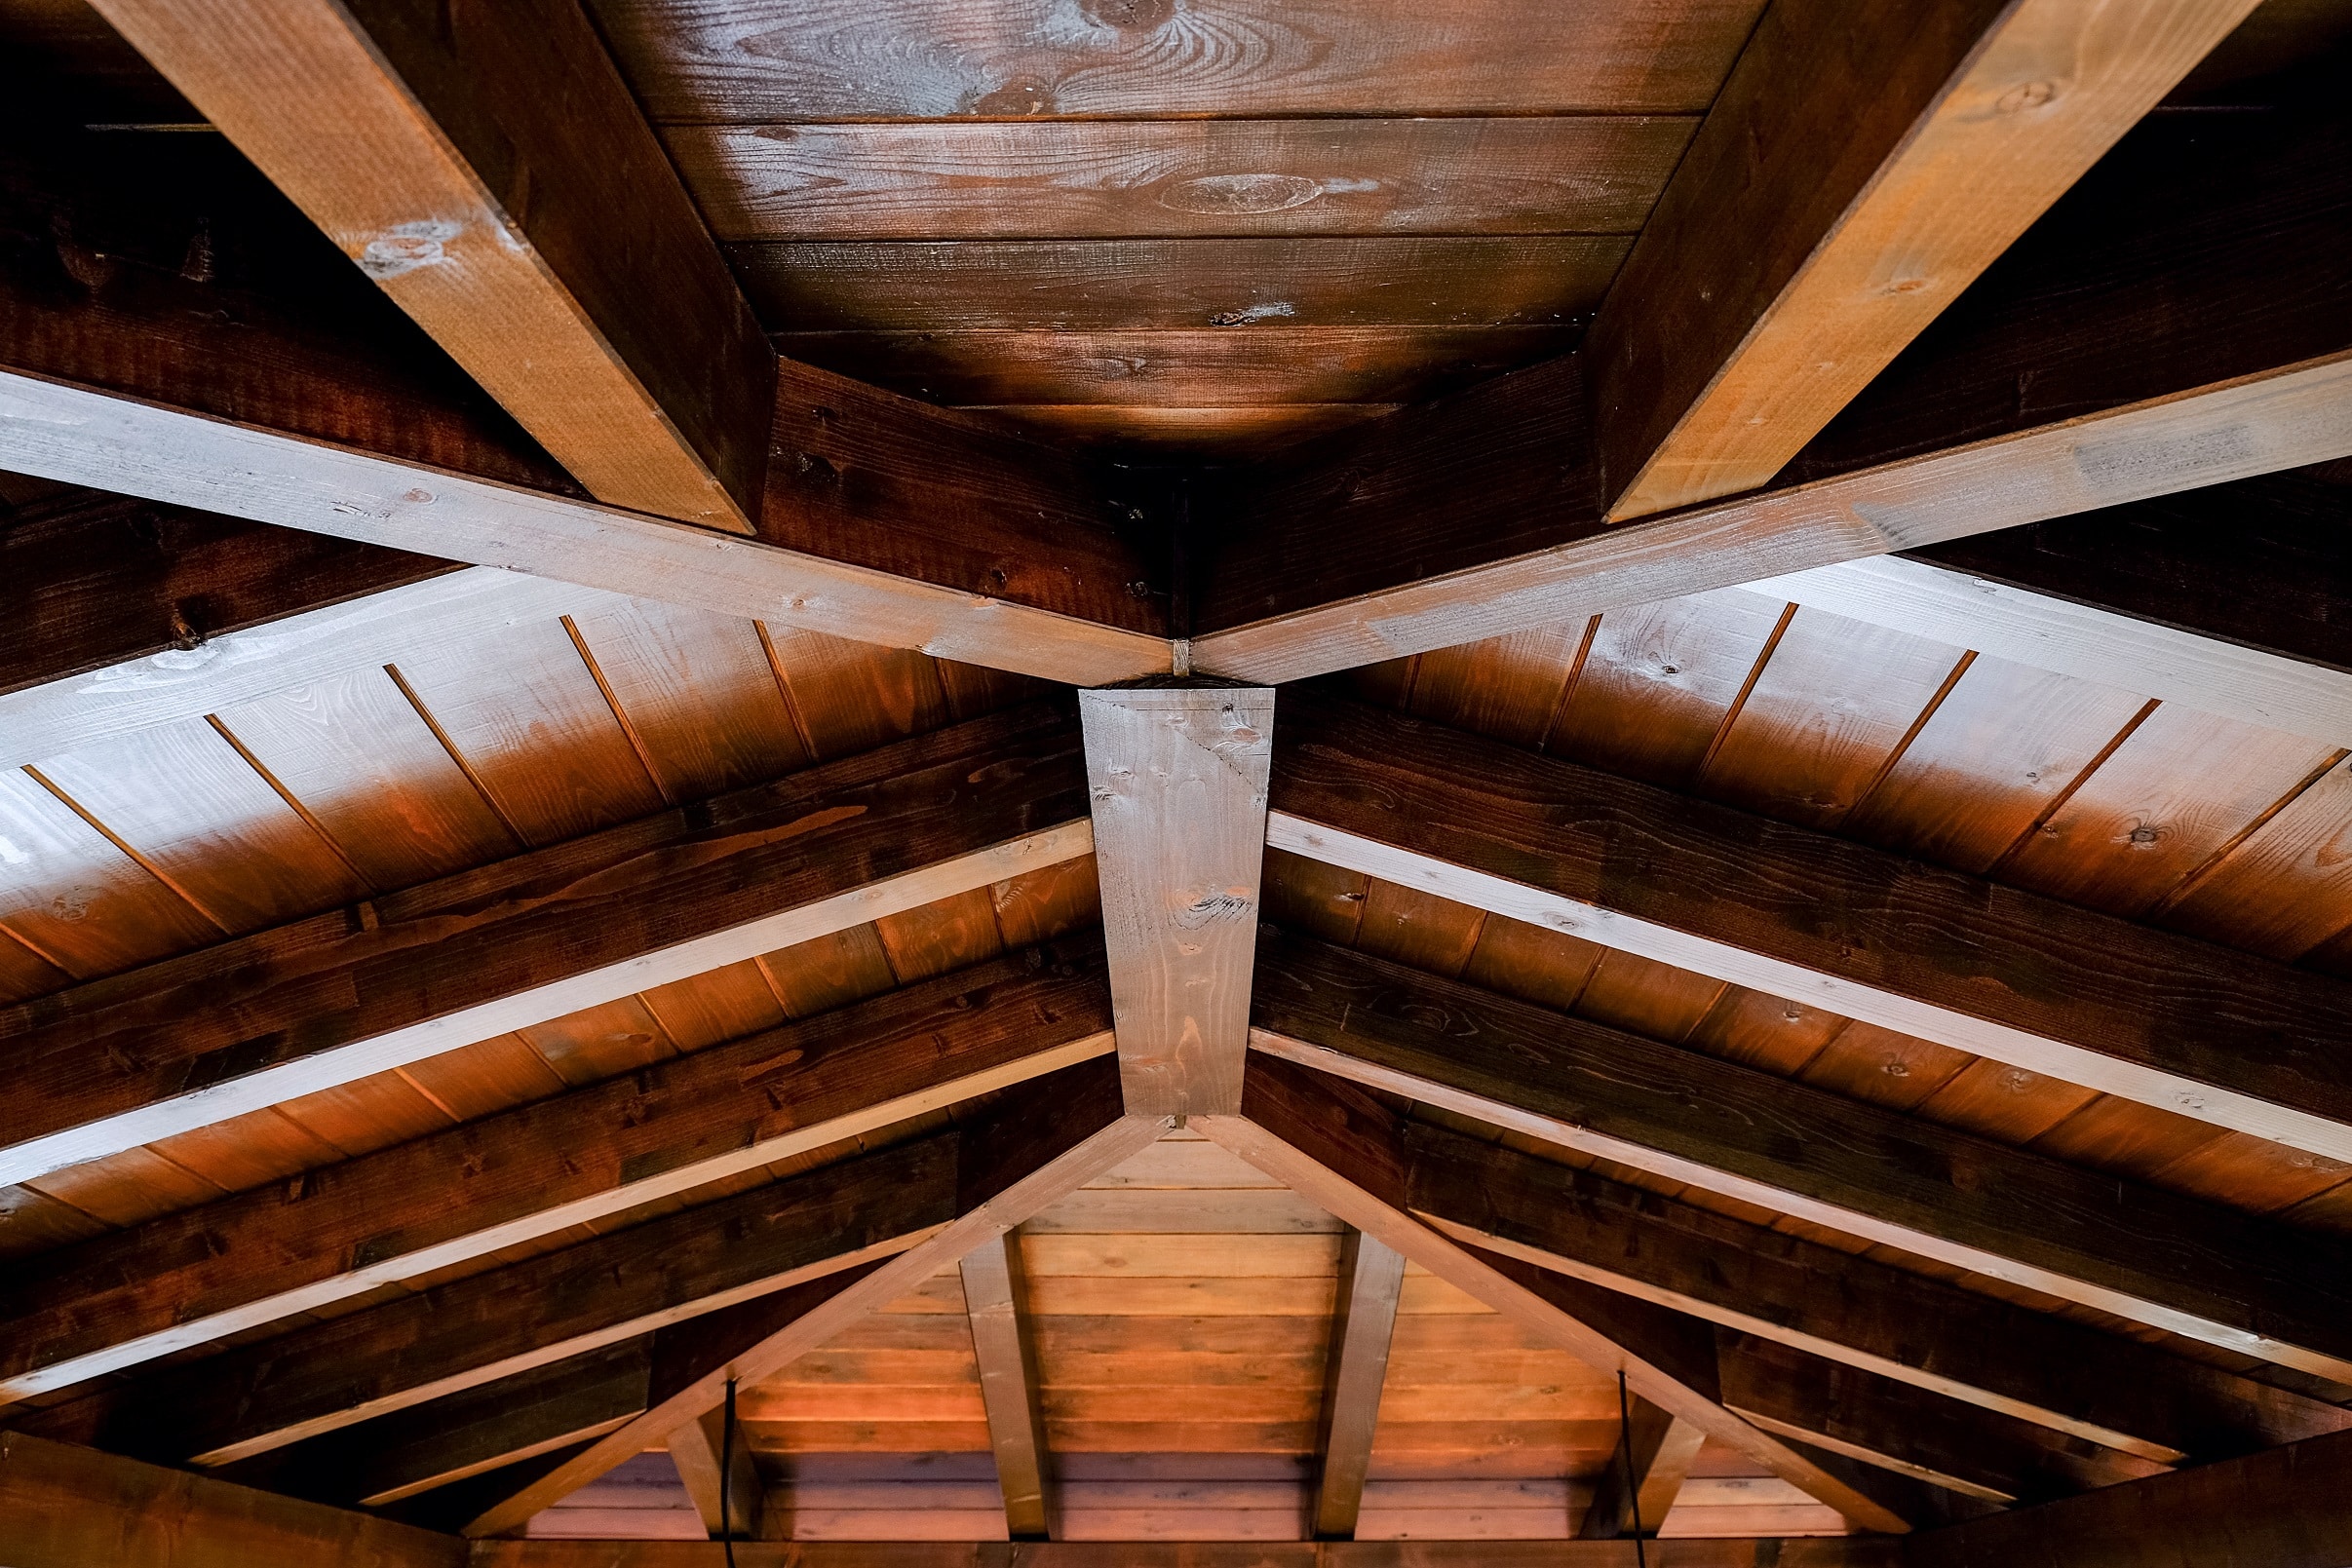 aesthetic wood ceiling interior